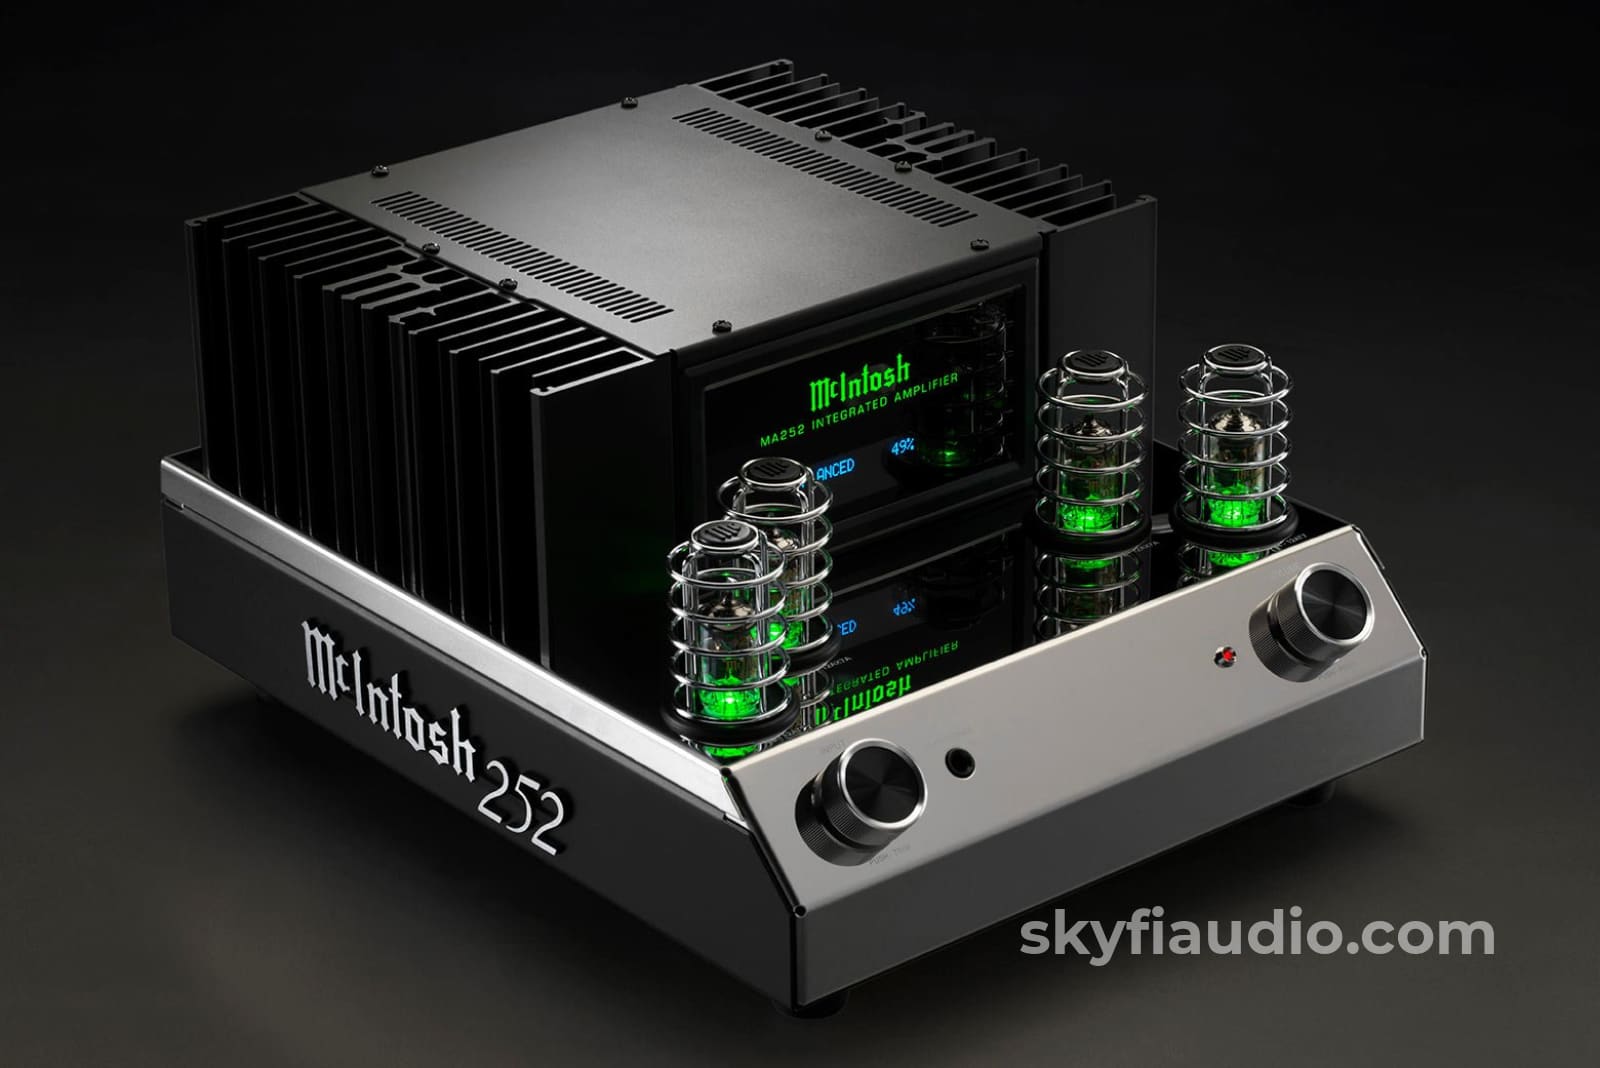 Mcintosh Ma252 Hybrid Drive Integrated Amplifier